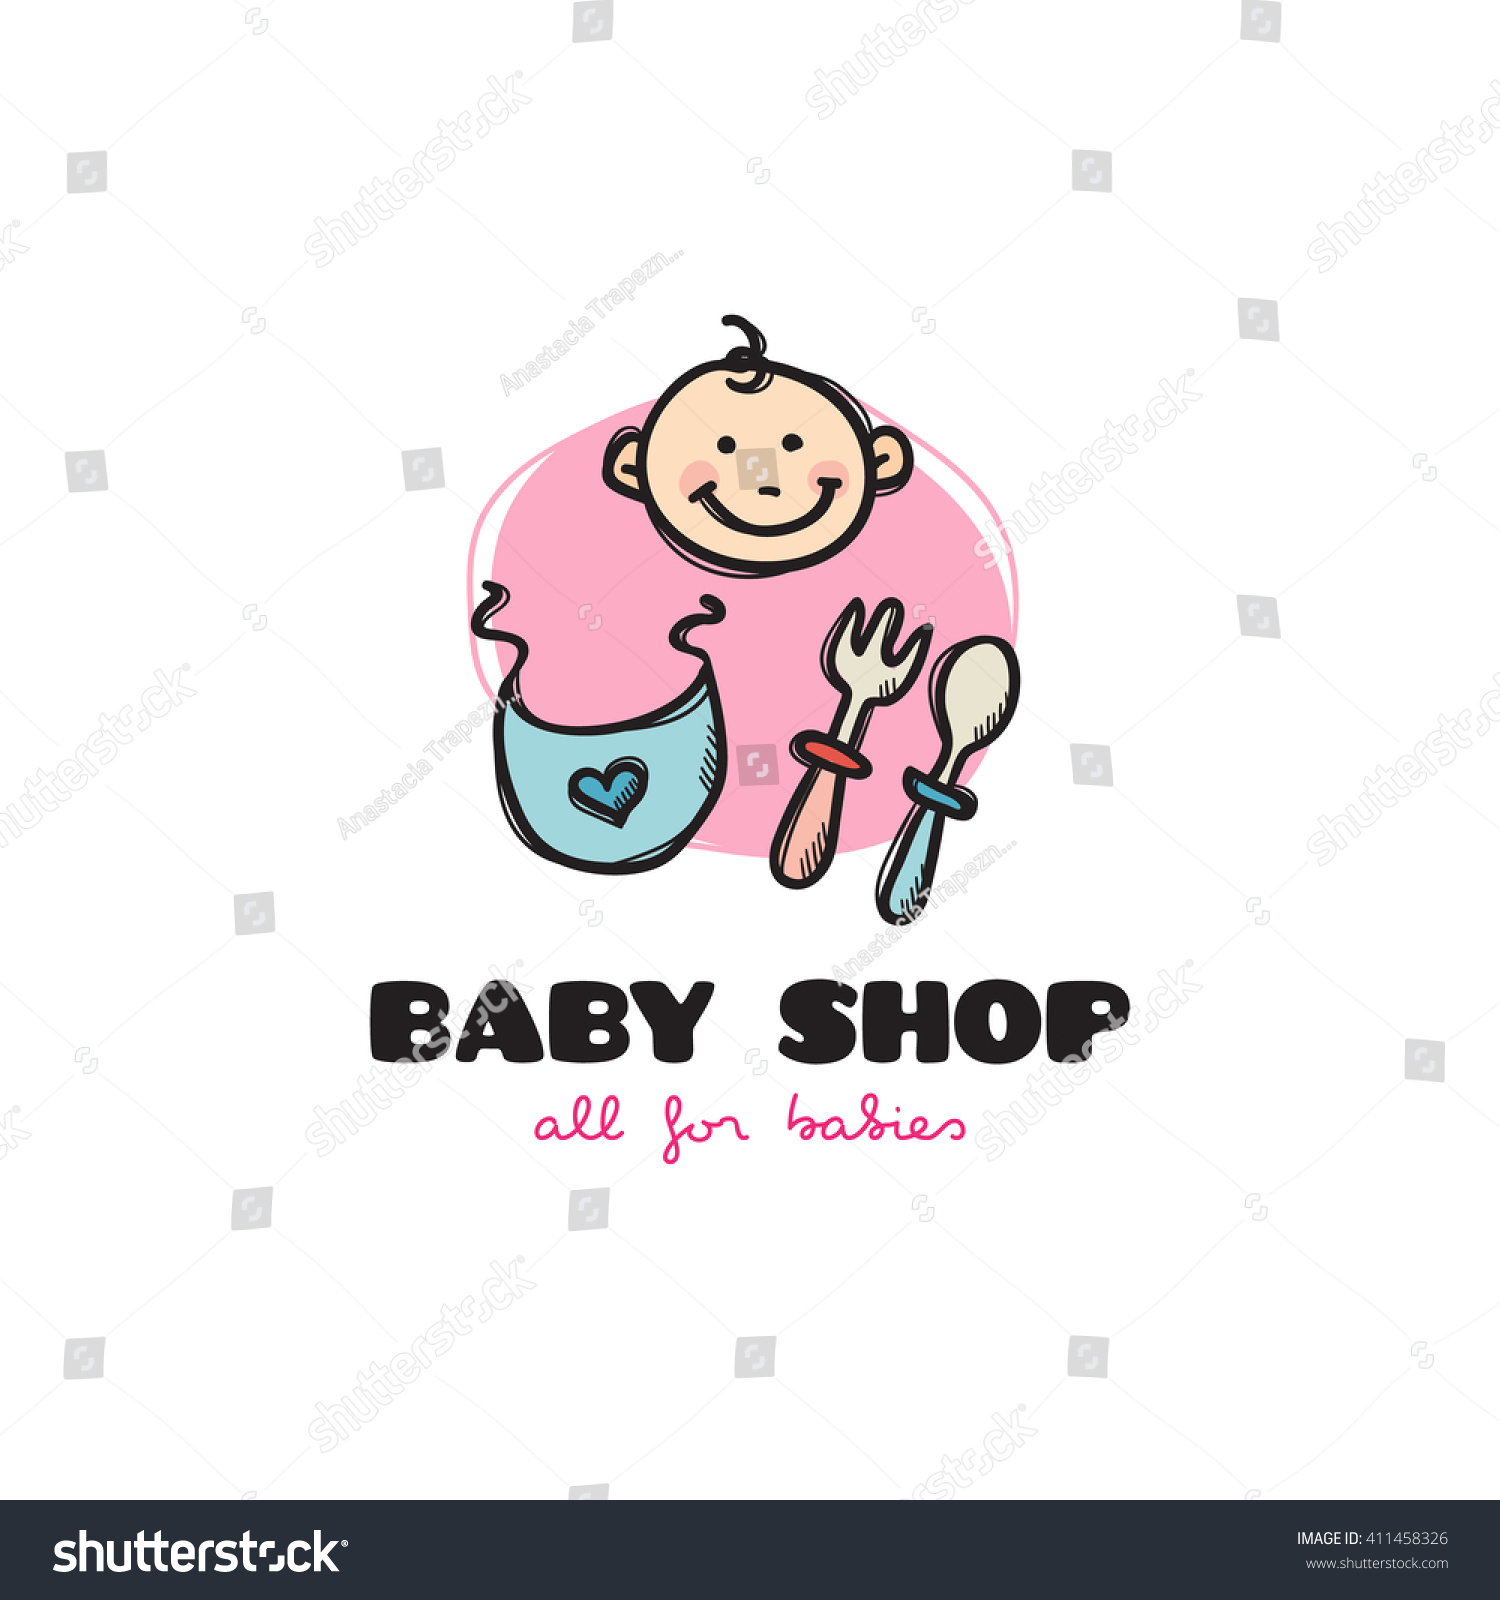 Vector Funny Cartoon Style Baby Shop Stock Vector 411458326 - Shutterstock